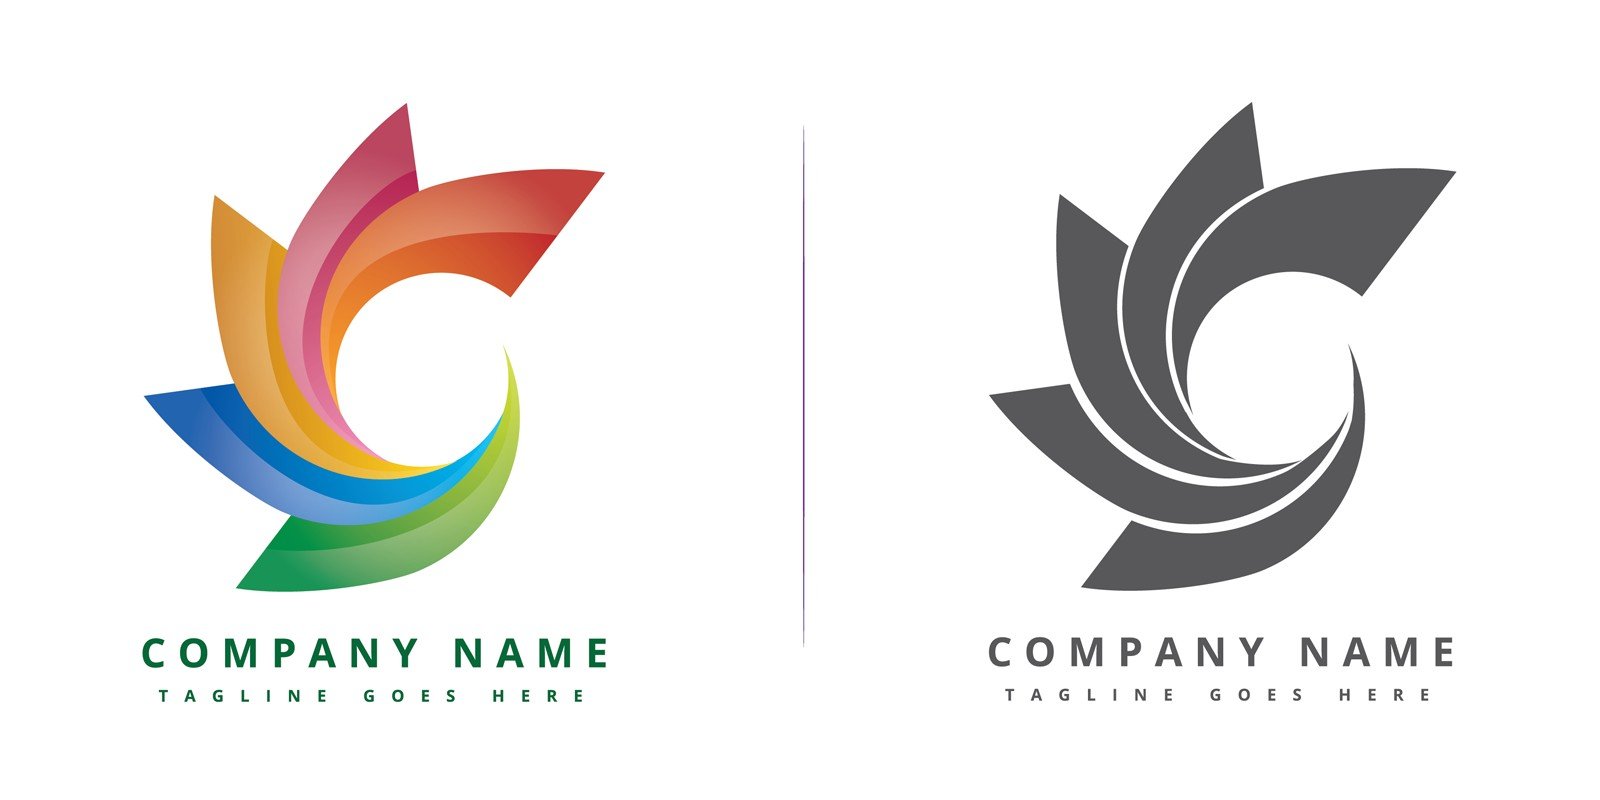 Colorful Circle Company Logo Design - Vector by OkanMawon | Codester